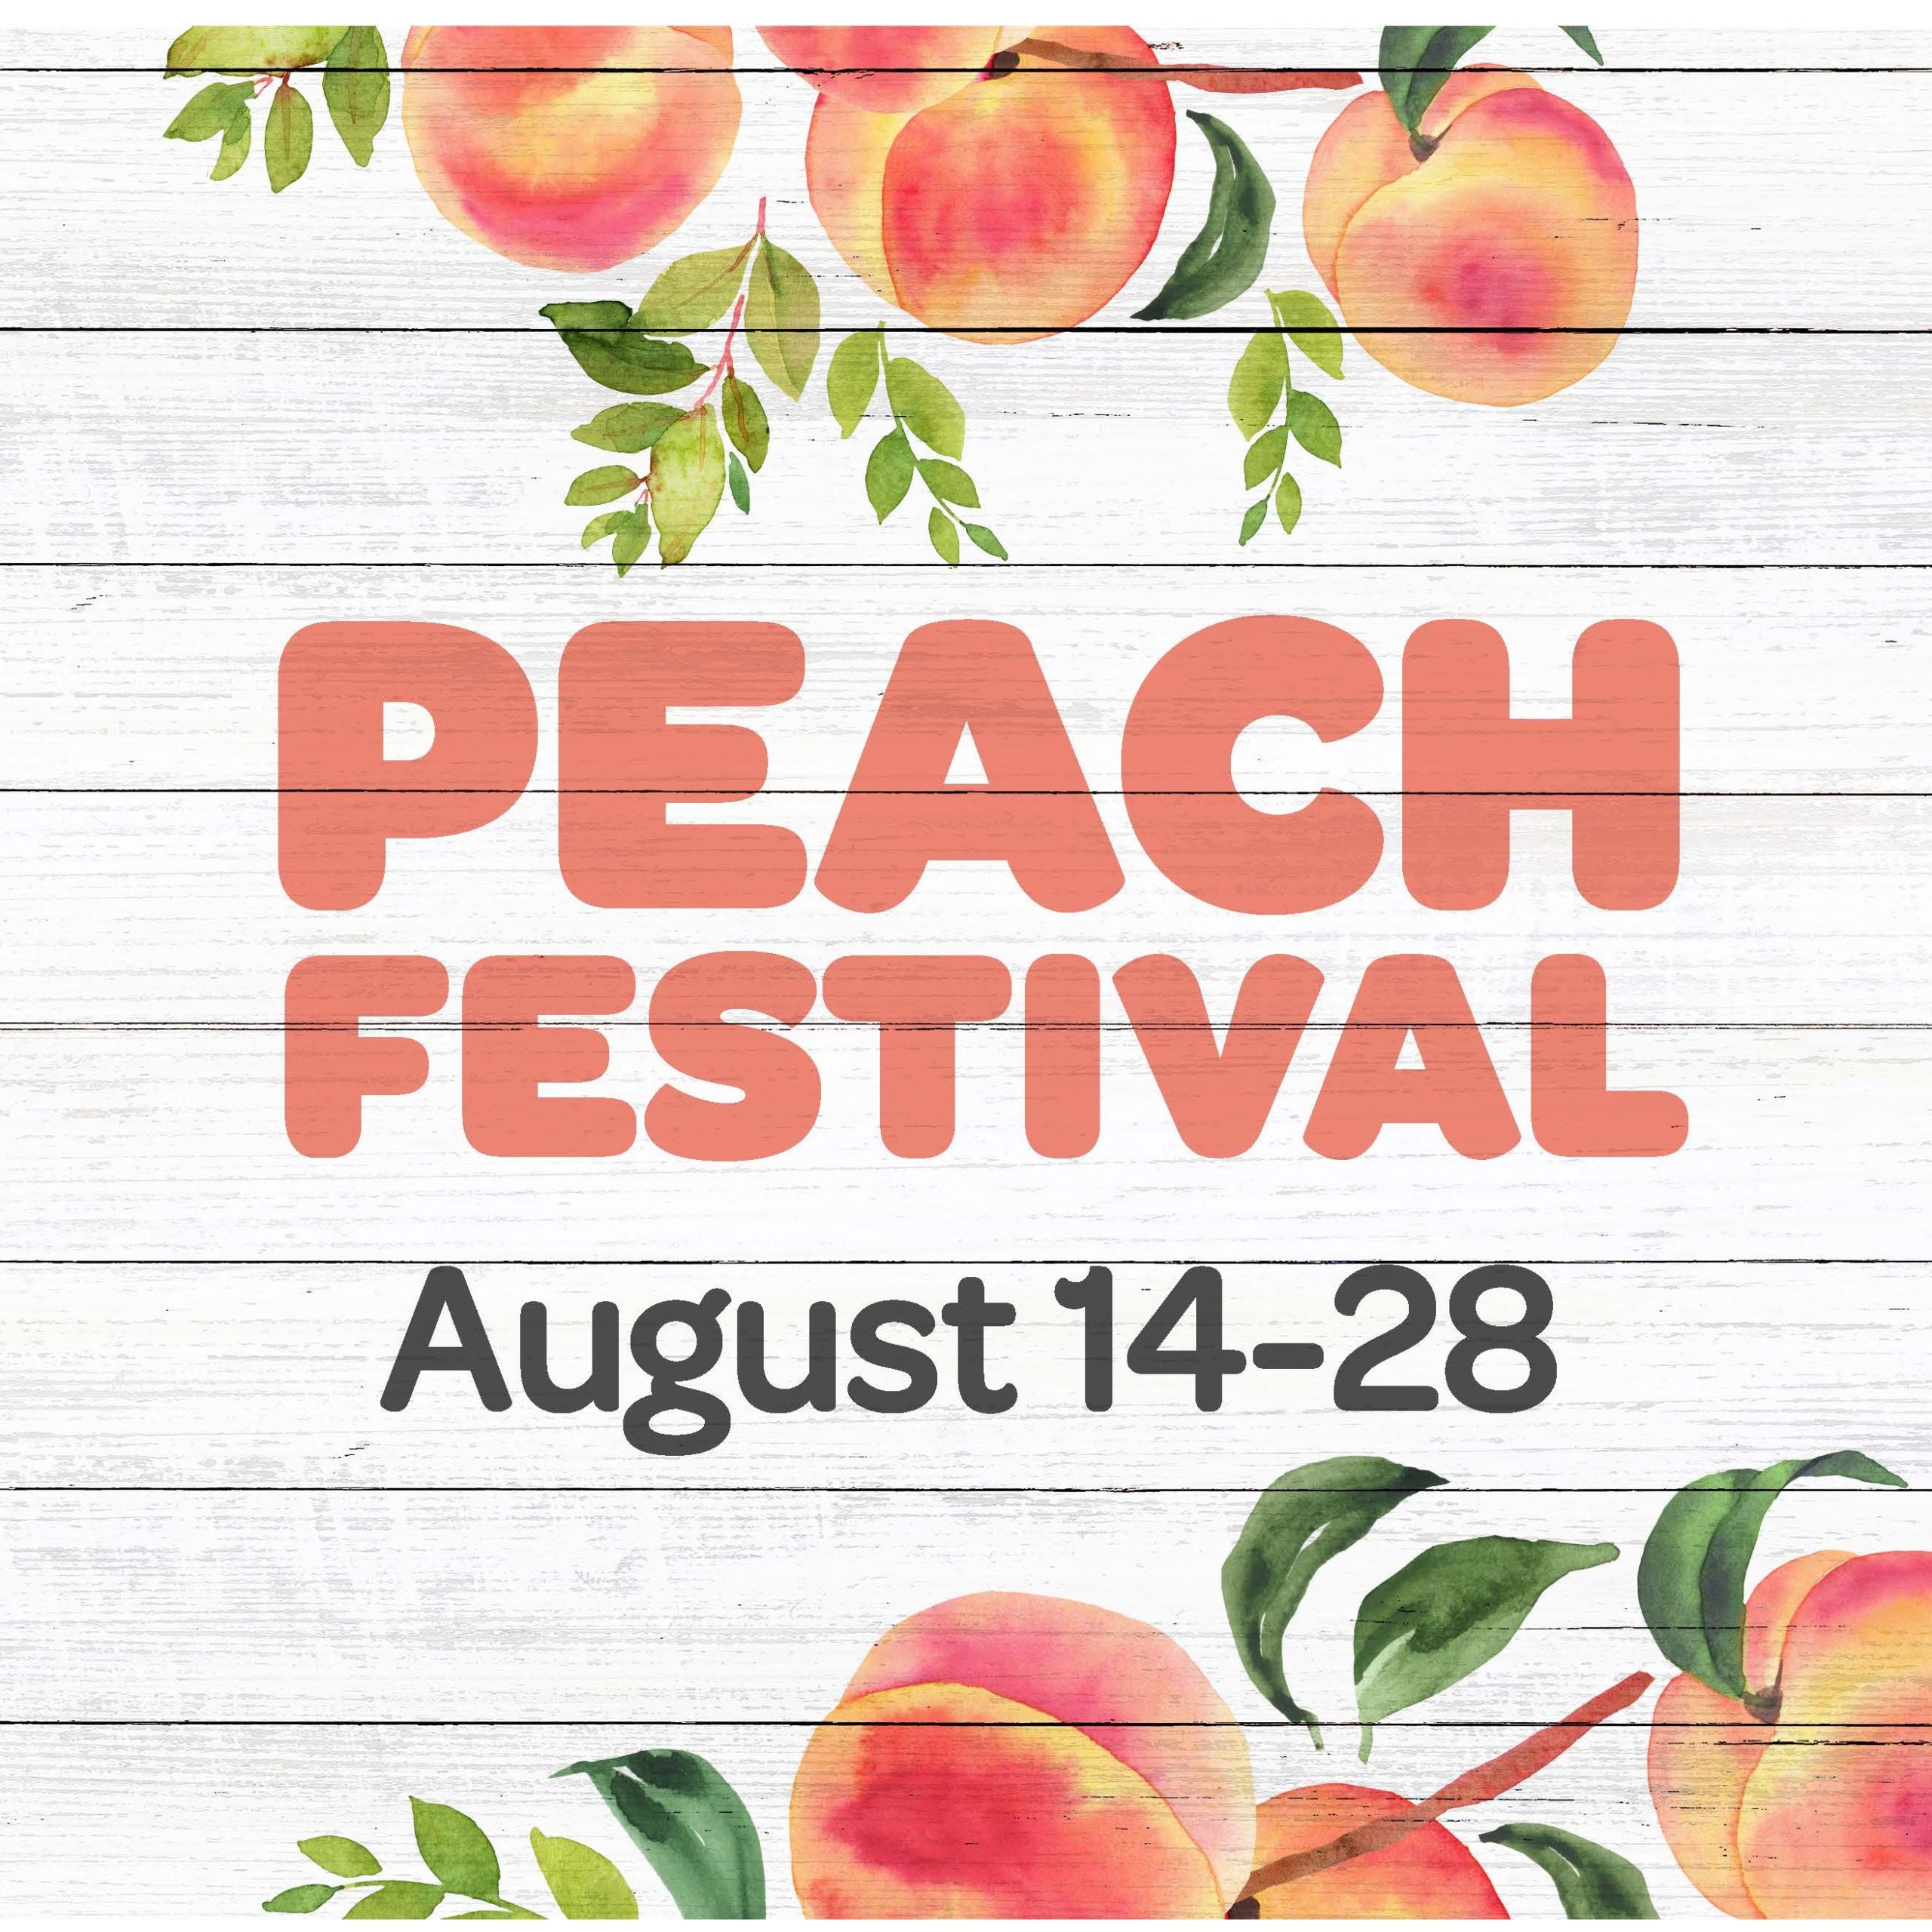 Hamilton Farmers’ Market Peach Festival!